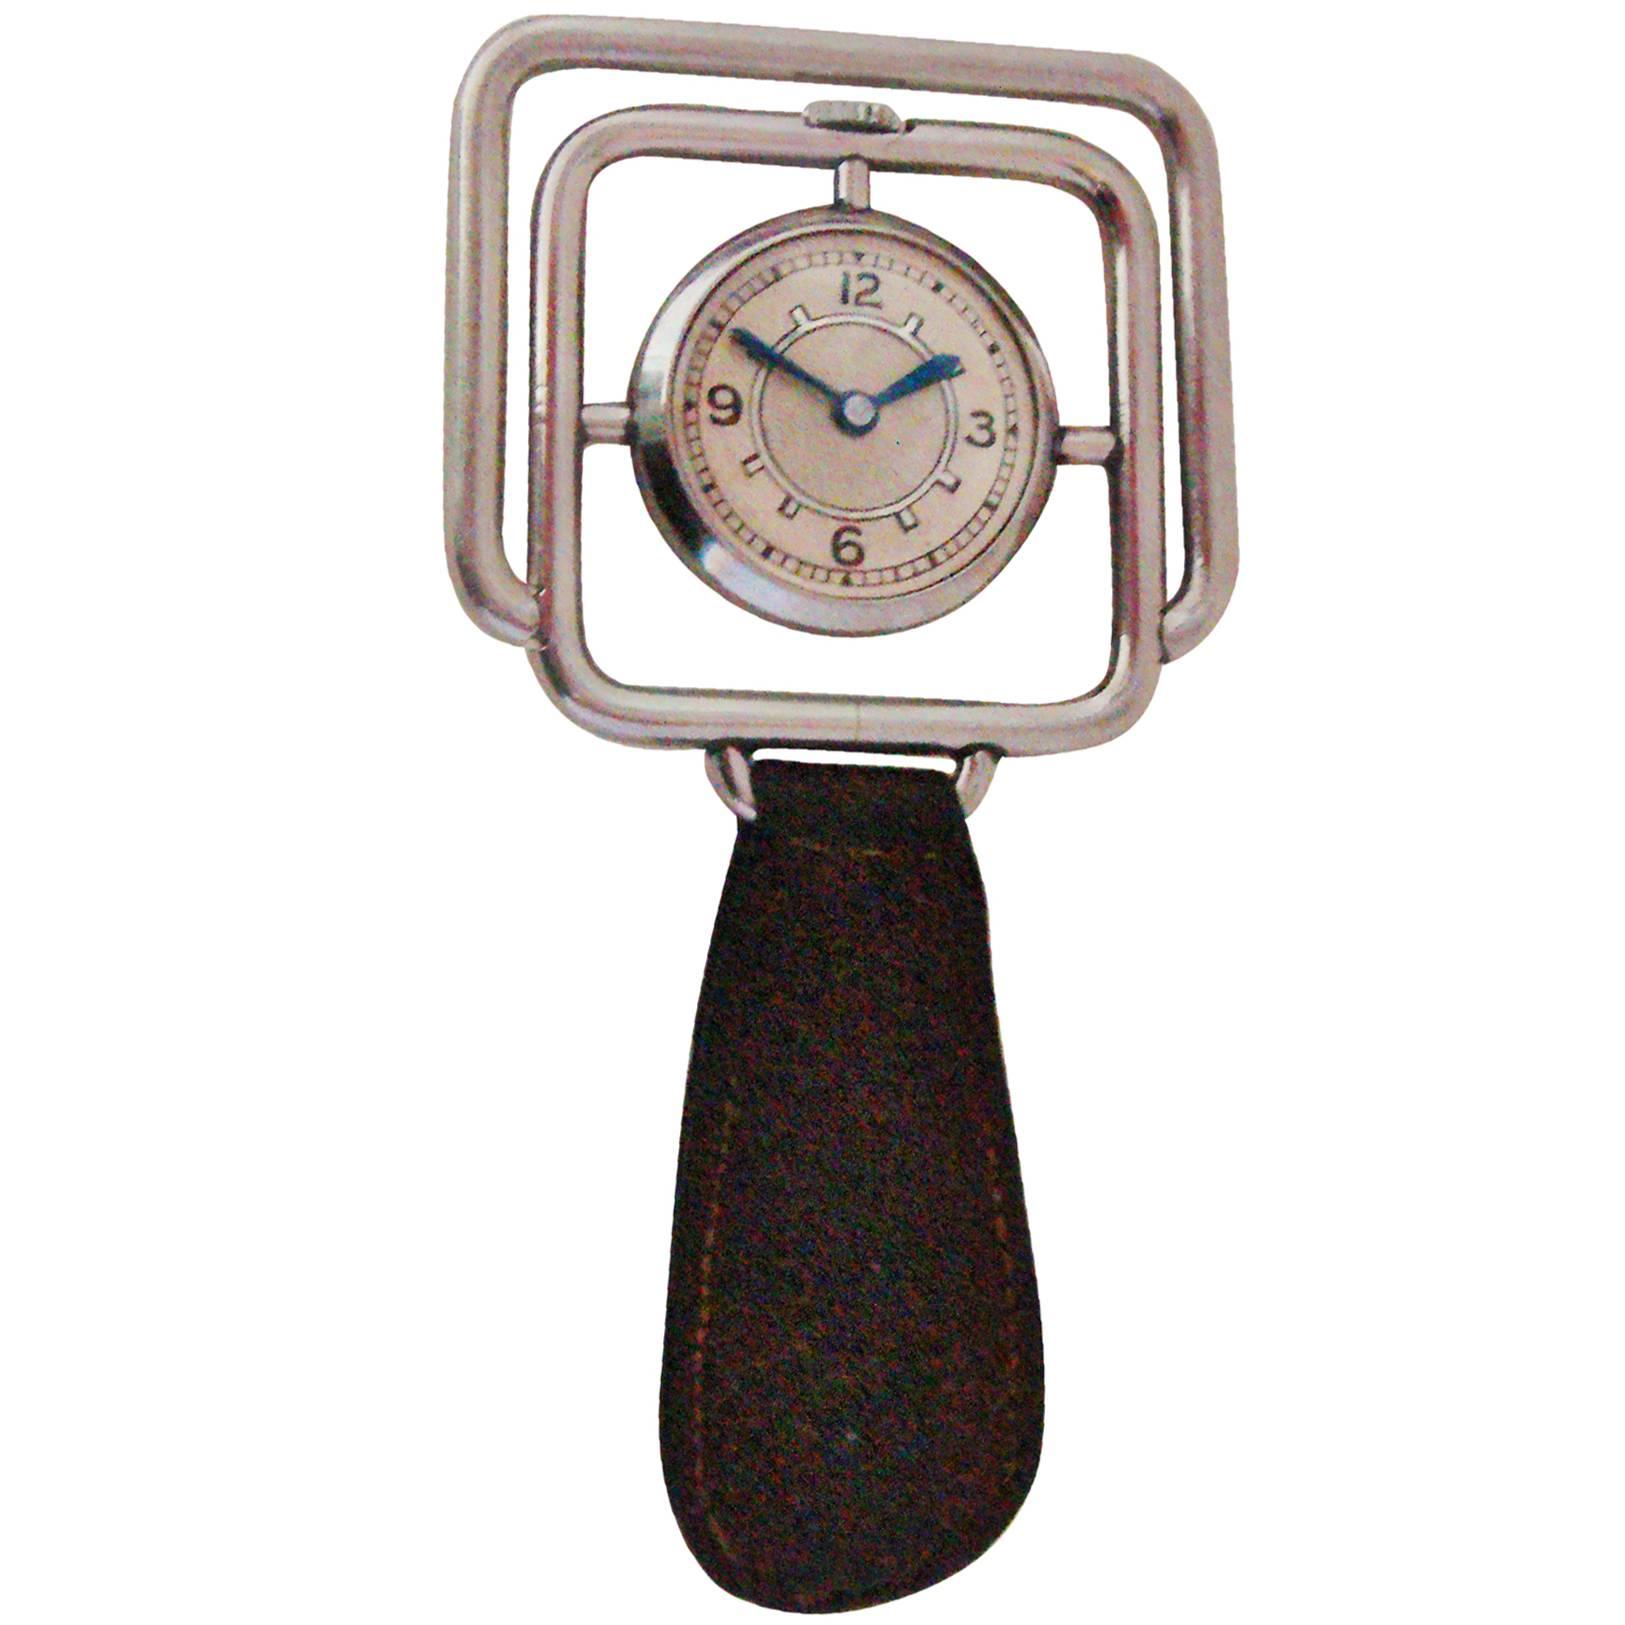 Rare Swiss Art Deco Pocket/Table, Encapsulated/Hermetic Watch